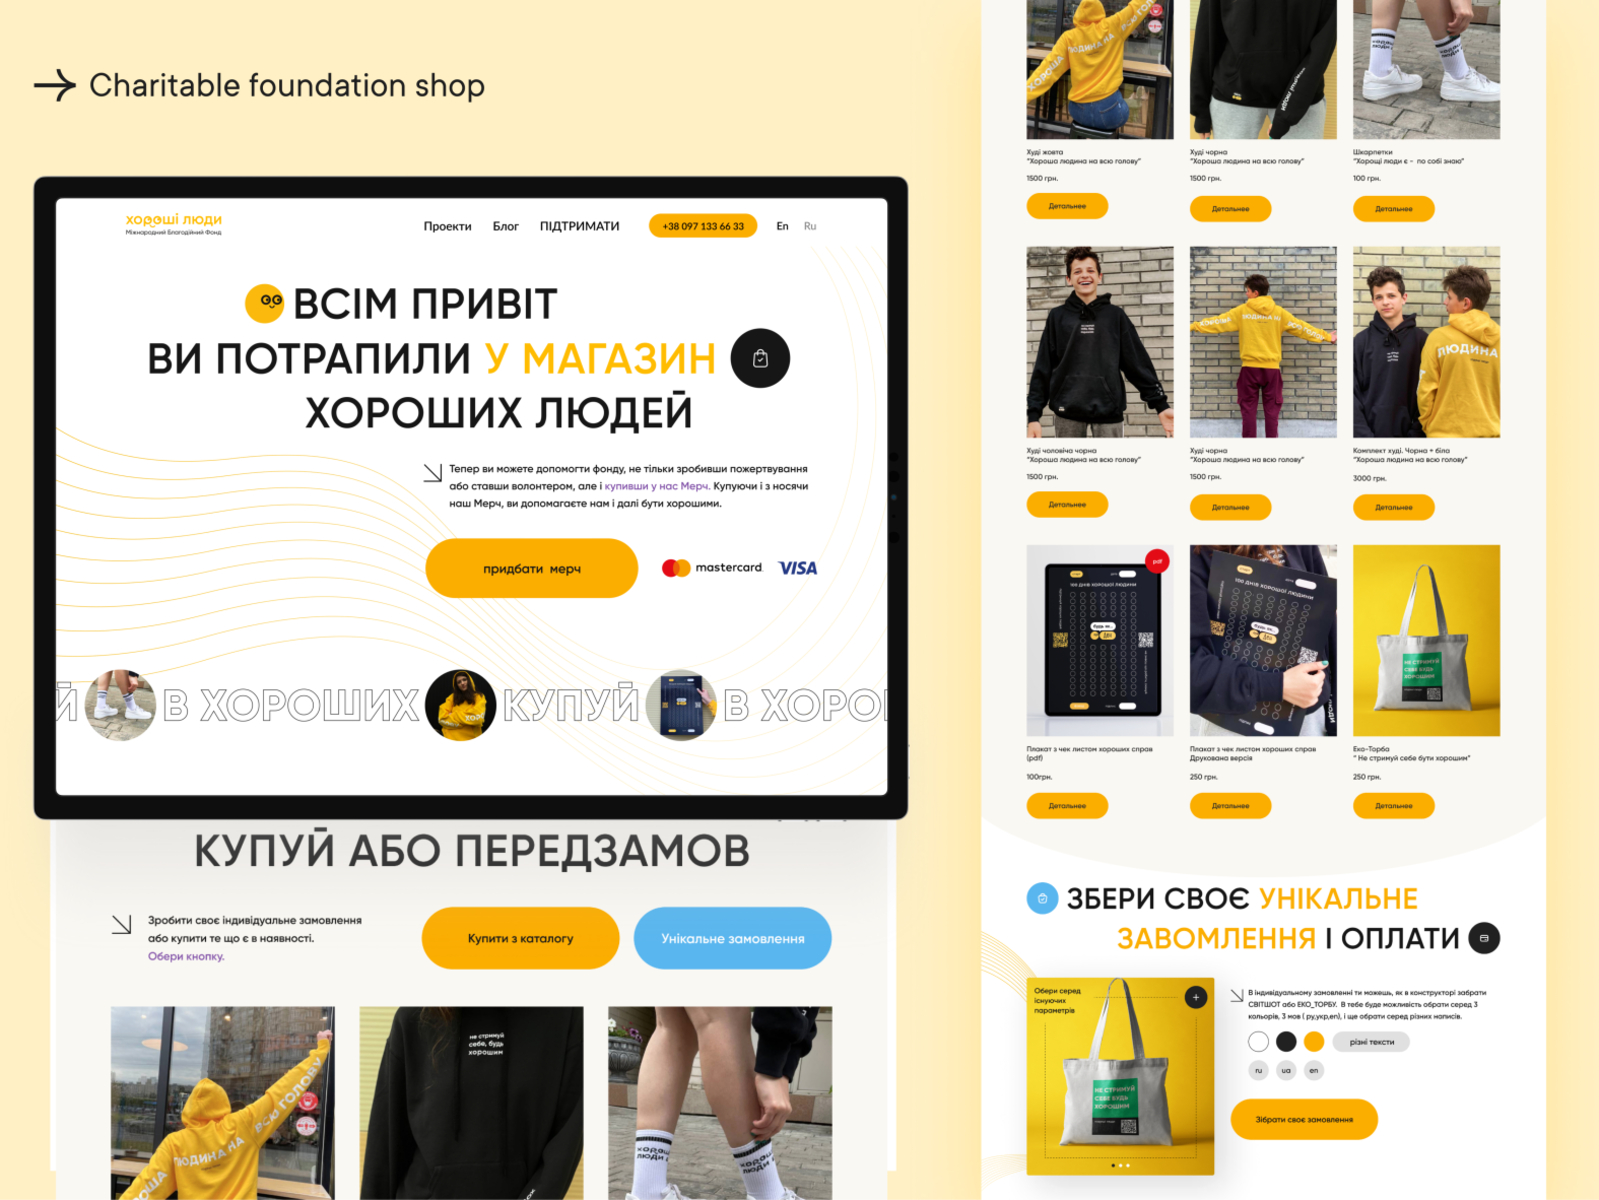 Charitable foundation shop by Oleksii Bocharov on Dribbble